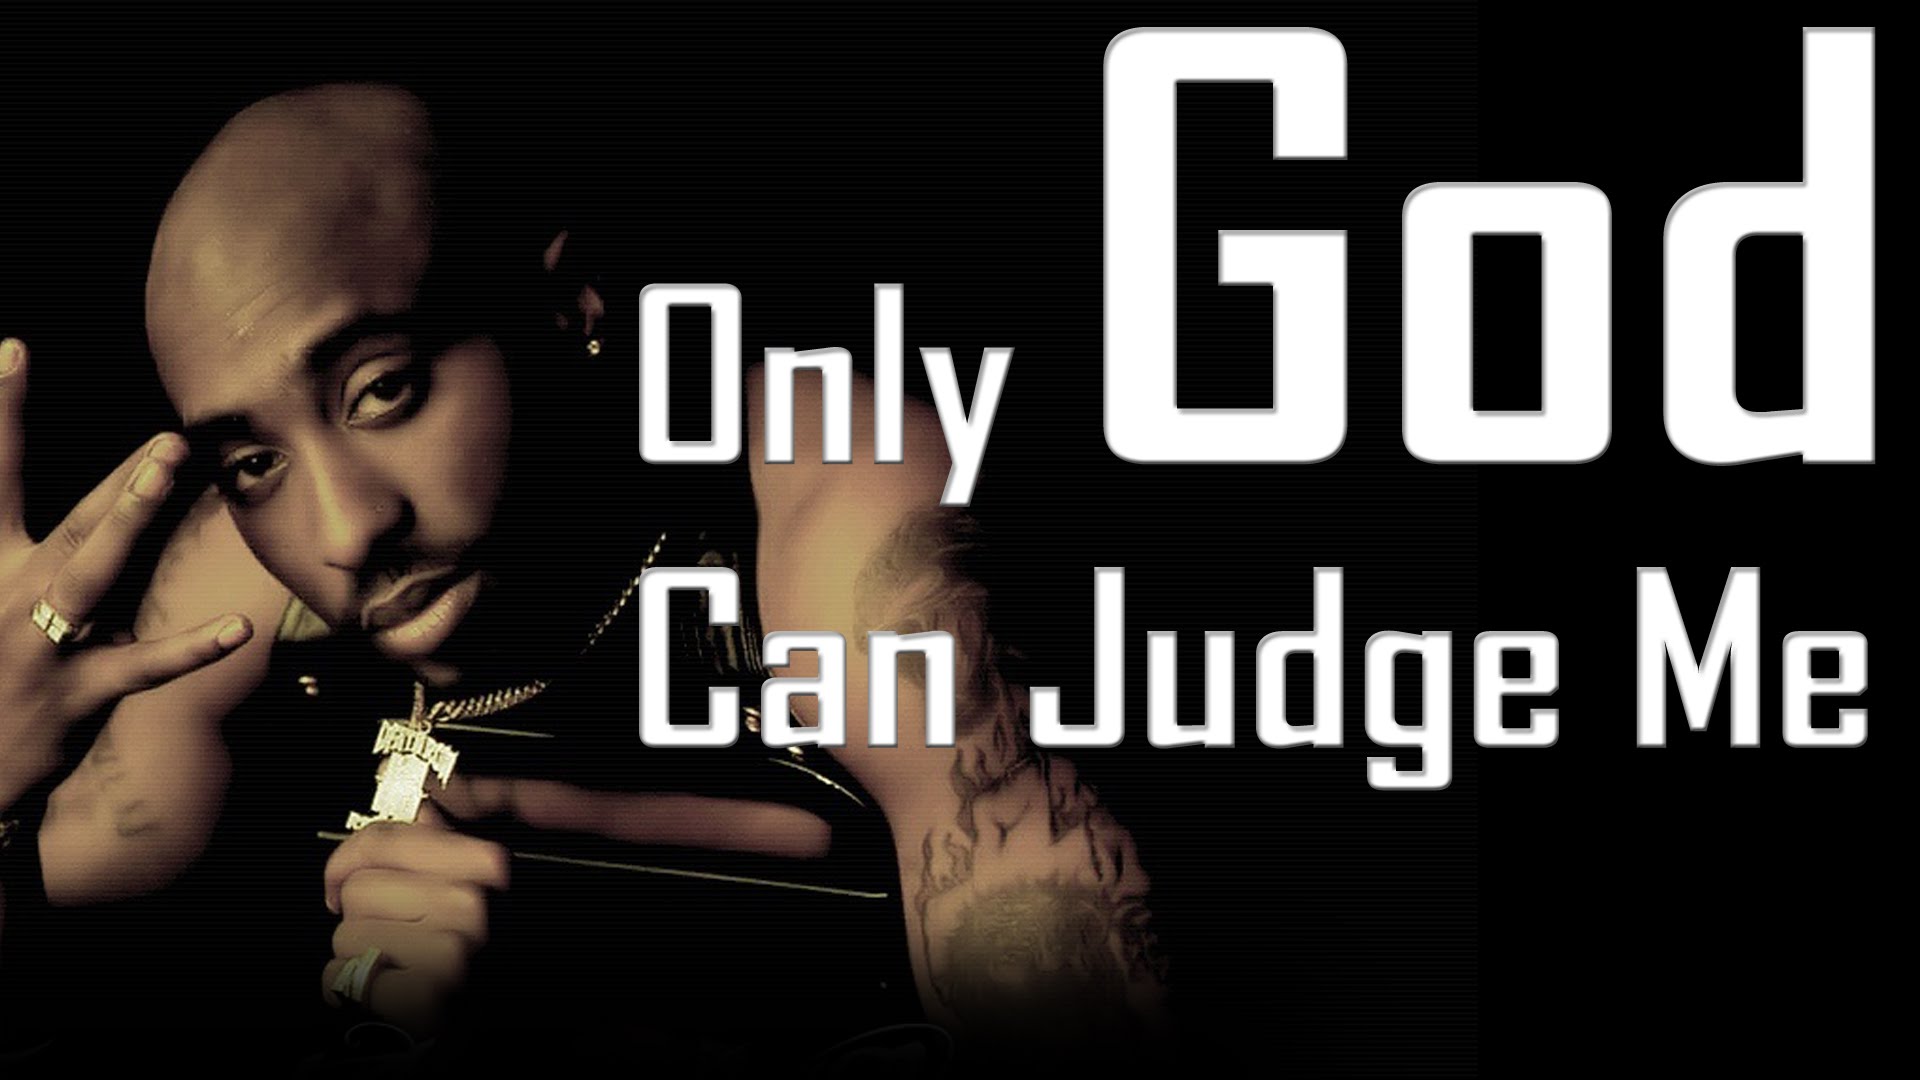 Yes, Catholics Can Judge!